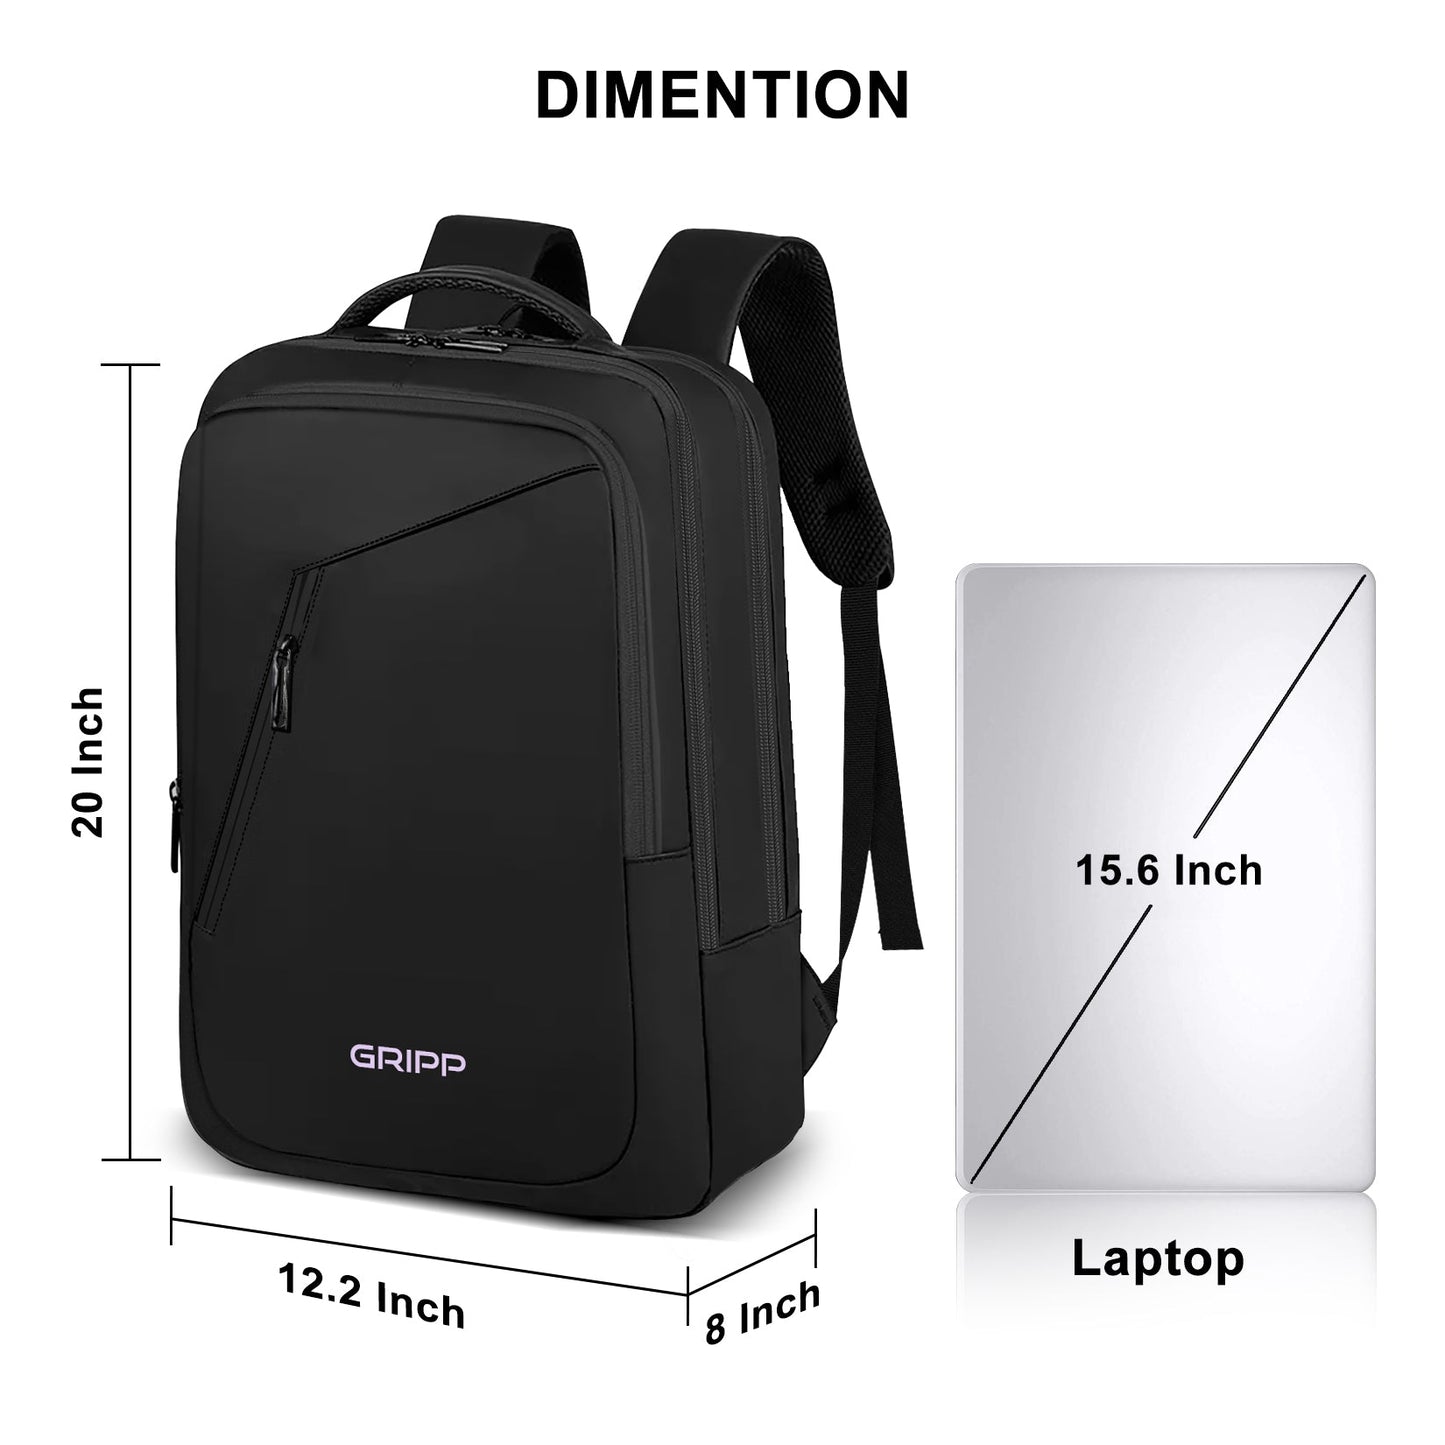 Gripp Ride Backpack Upto 15.6" For Laptop/macbook - Black